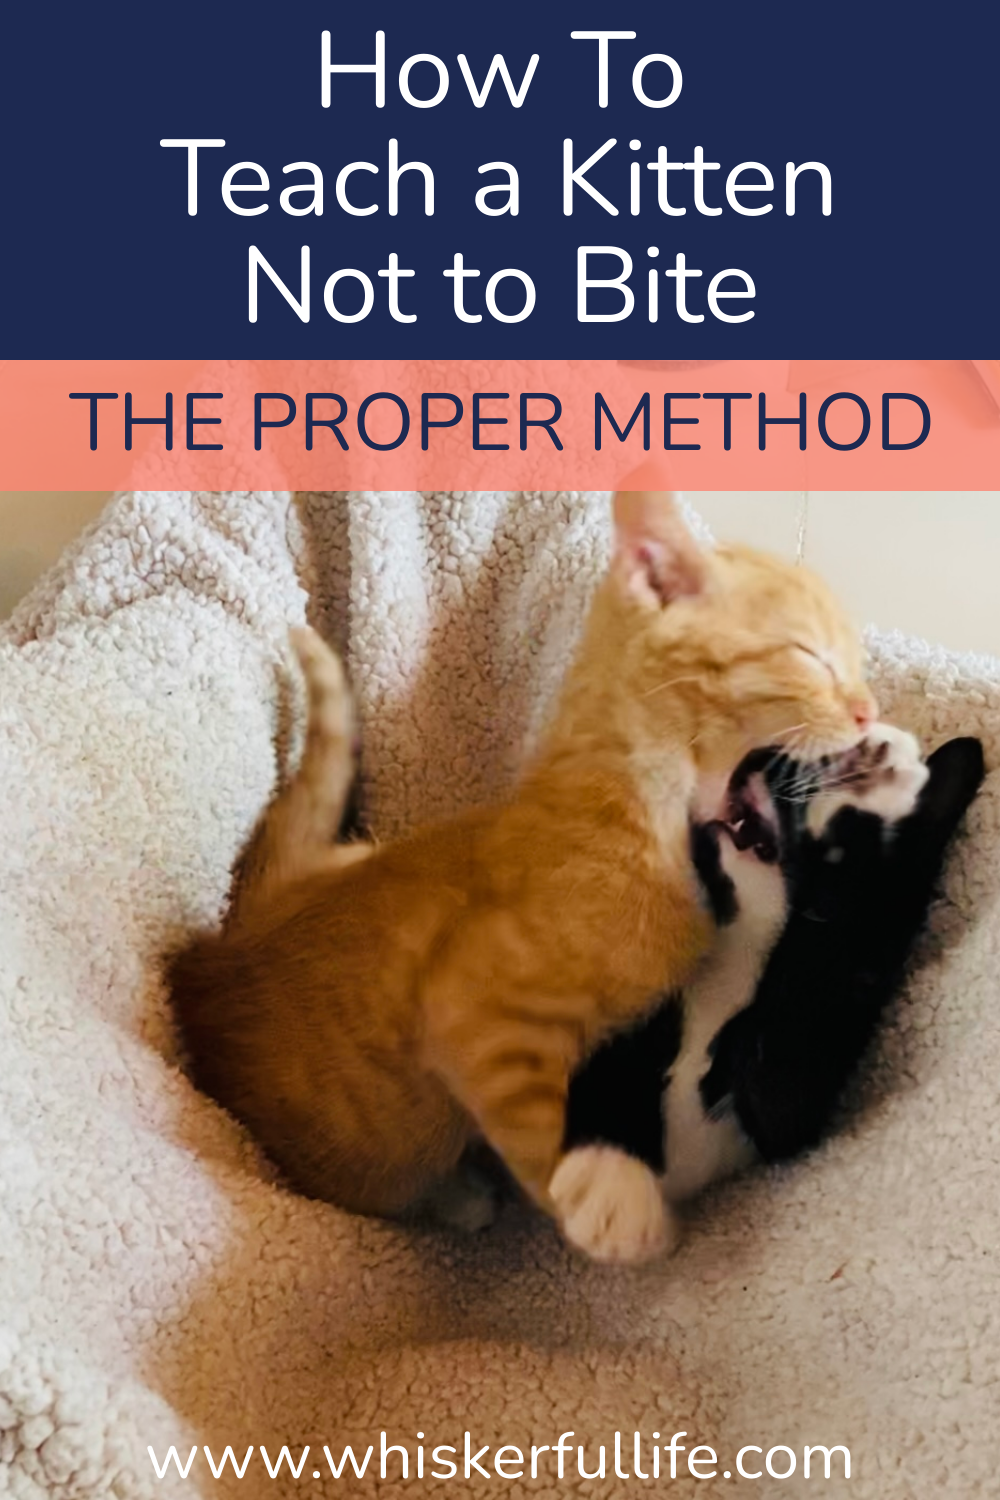 How To Teach a Kitten Not To Bite